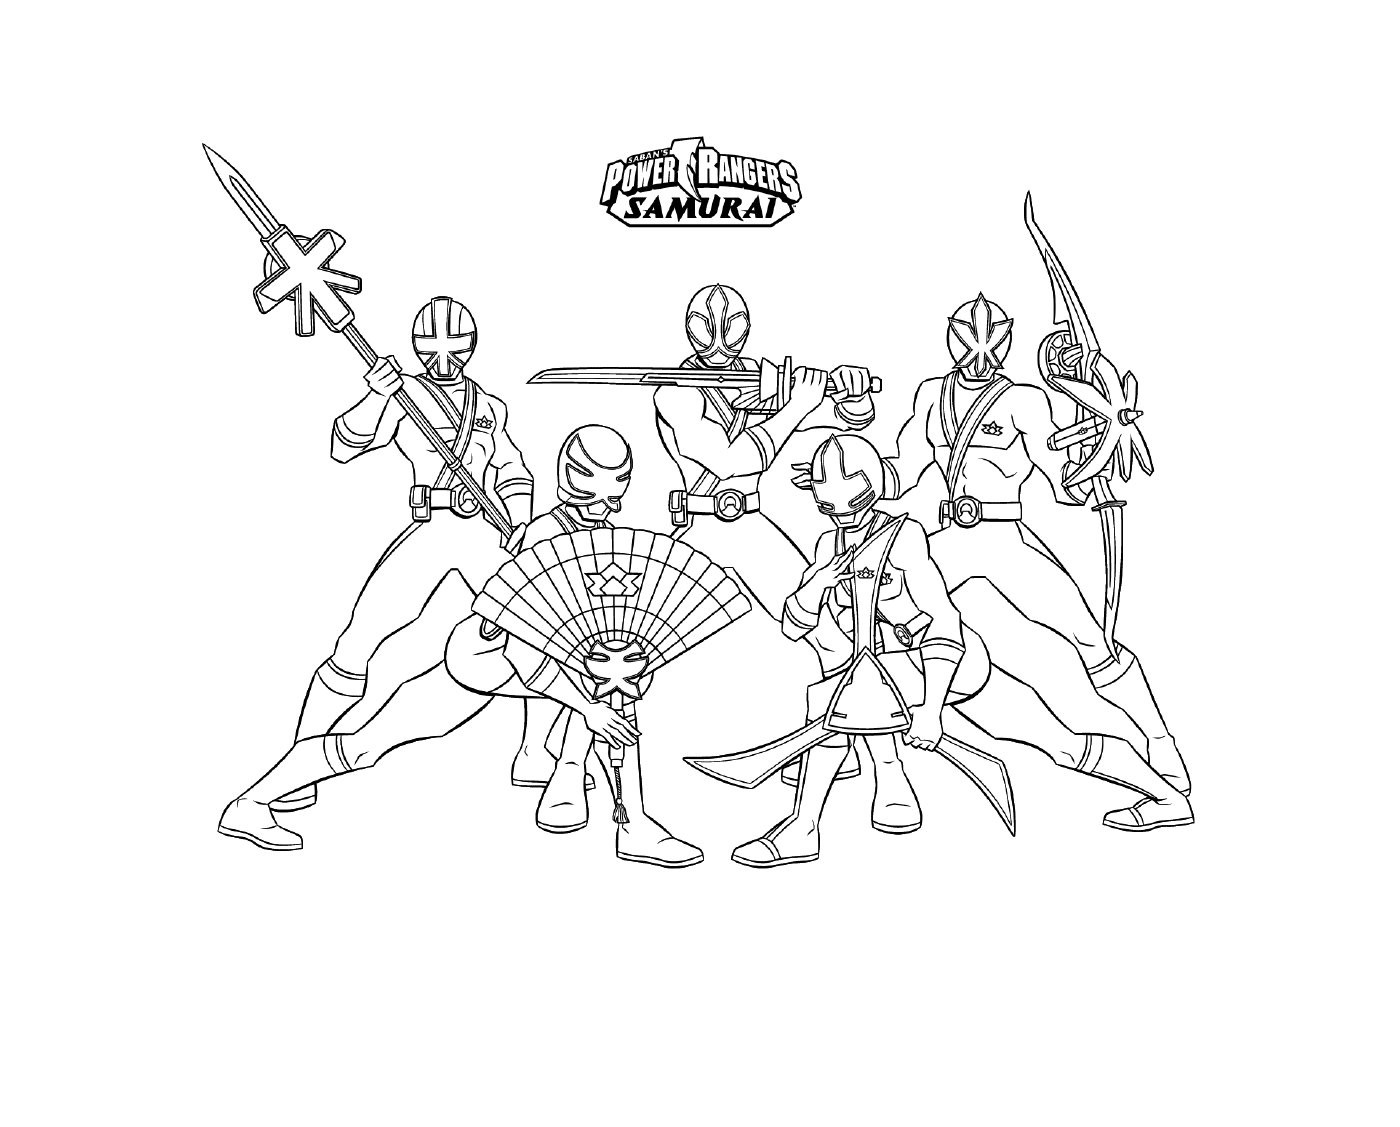  Samurai Power Rangers Team 